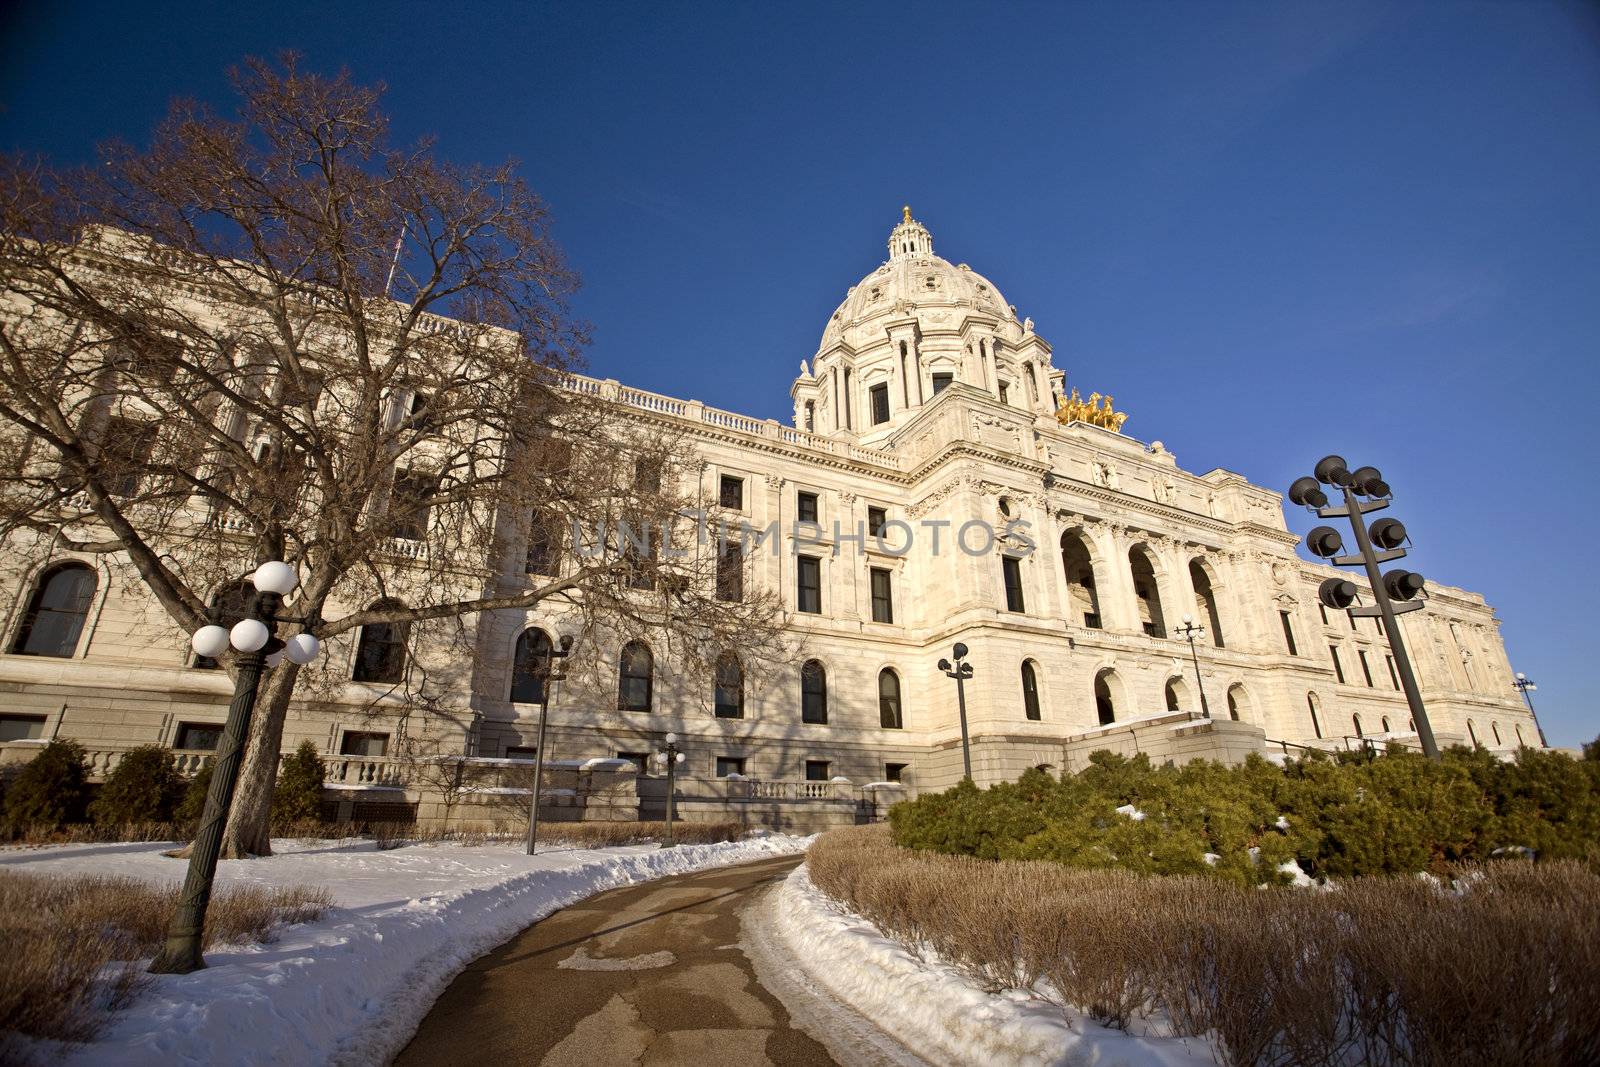 Capitol Building St Paul Minnesota by pictureguy